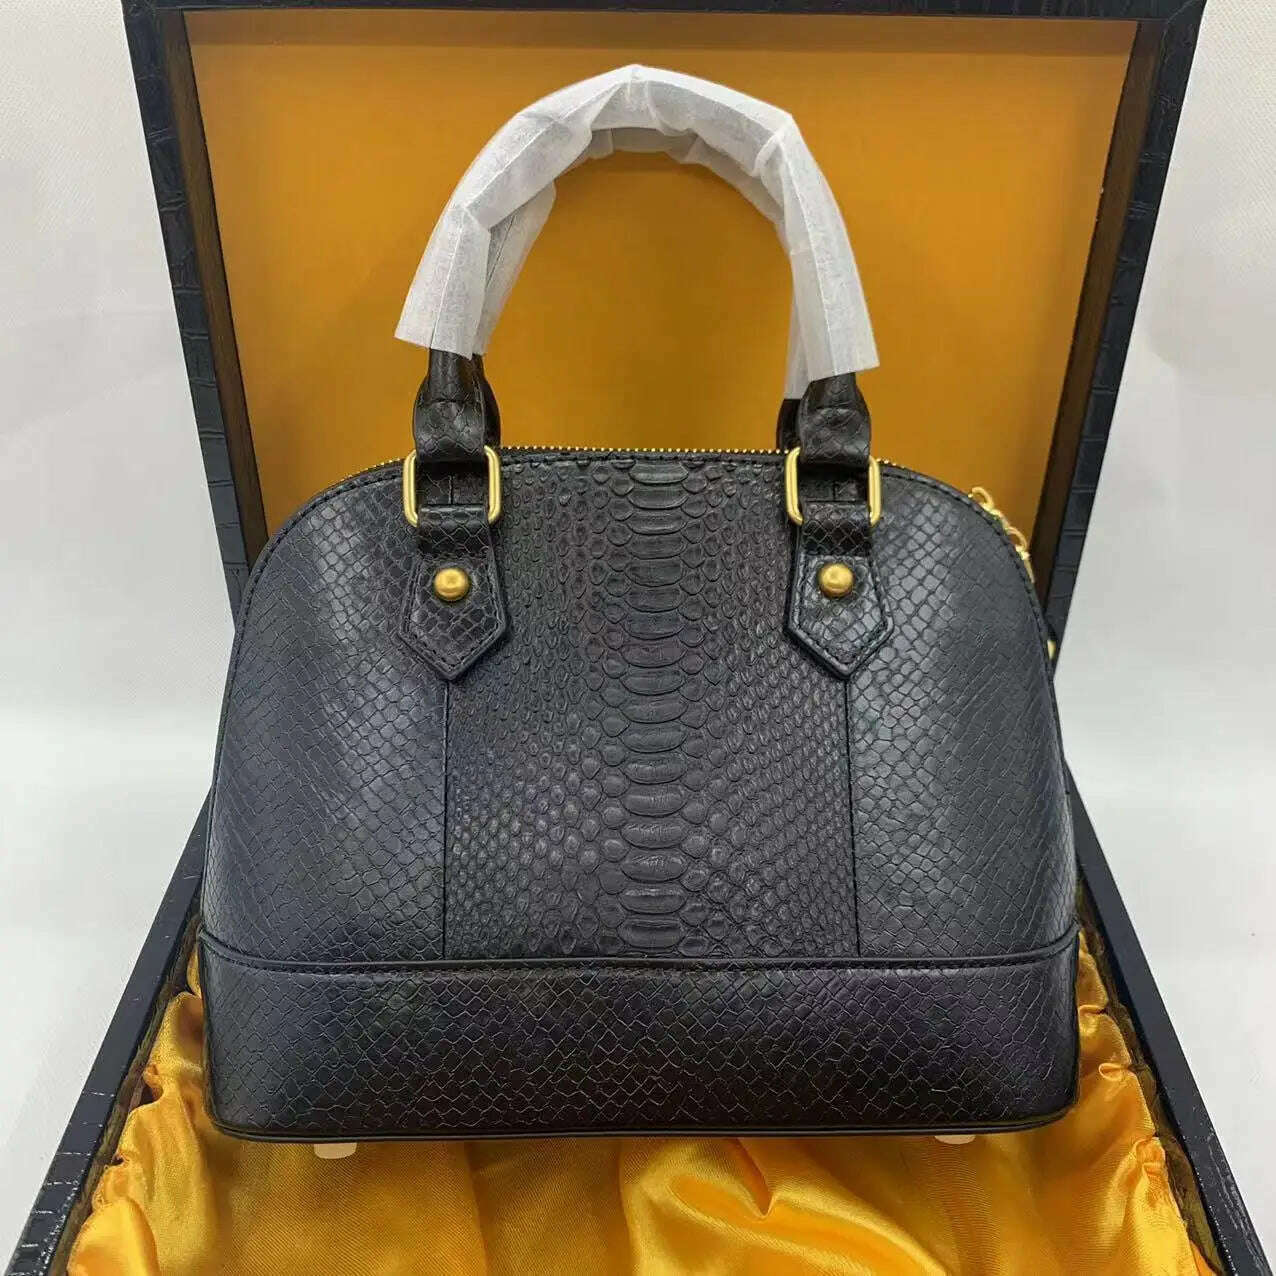 KIMLUD, Luxury Brand Women's Bag Noble Snake Shell Bag European And American Fashion Personalized Bag Famous Designer Handbag For Women, black, KIMLUD Womens Clothes